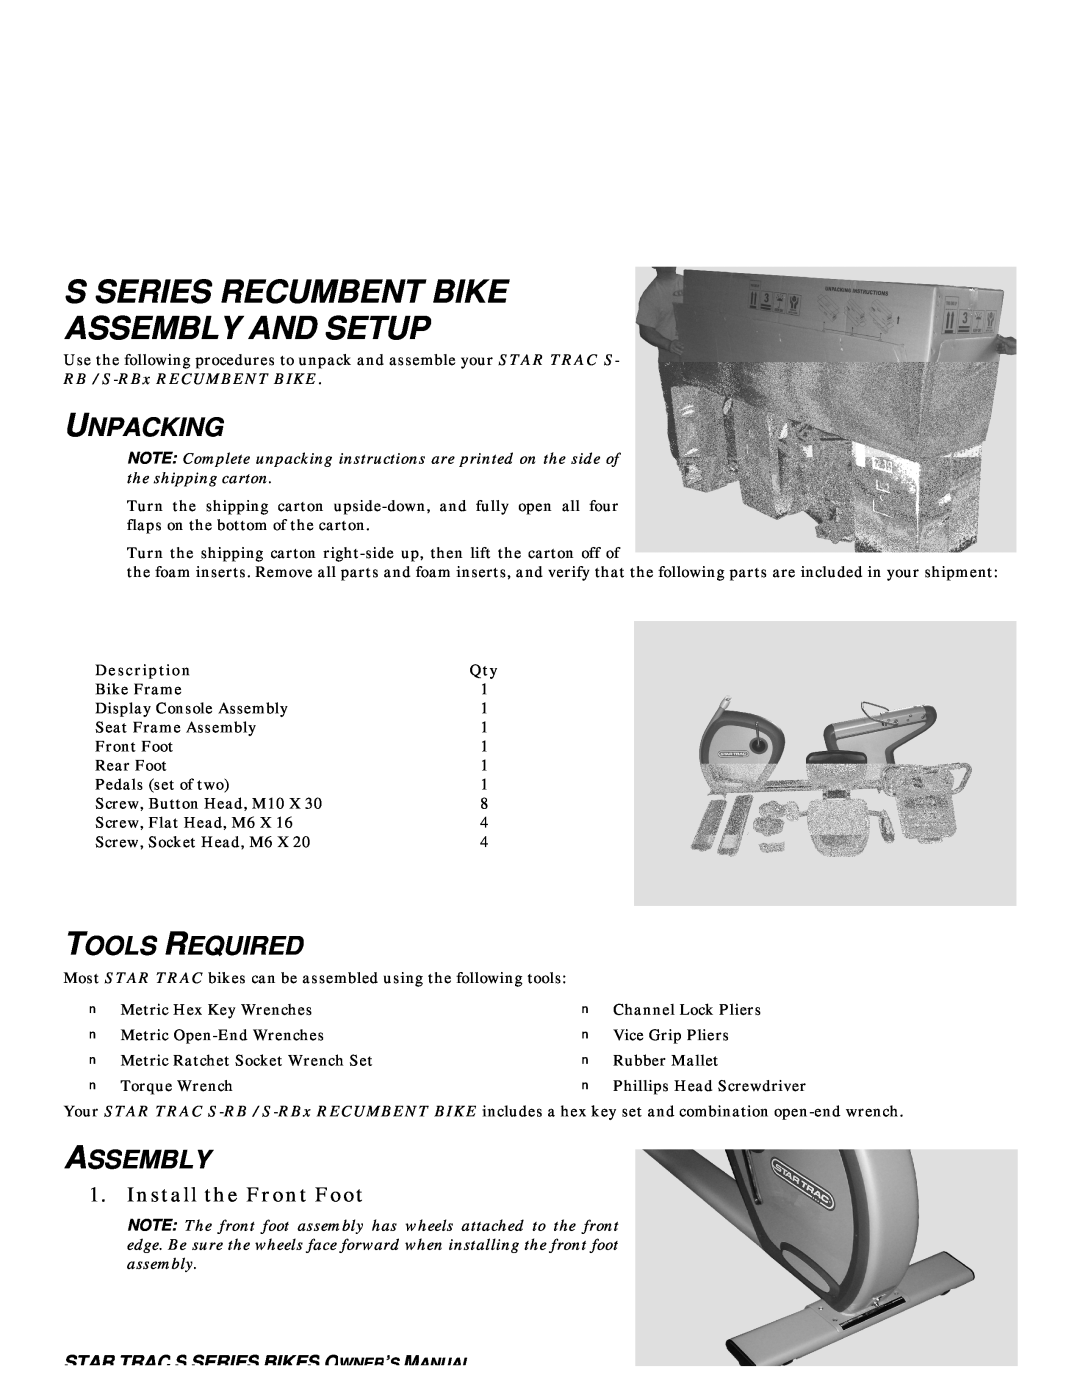 Star Trac S-UB UPRIGHT BIKE S Series Recumbent Bike Assembly And Setup, RB / S-RBx RECUMBENT BIKE, Unpacking, Description 